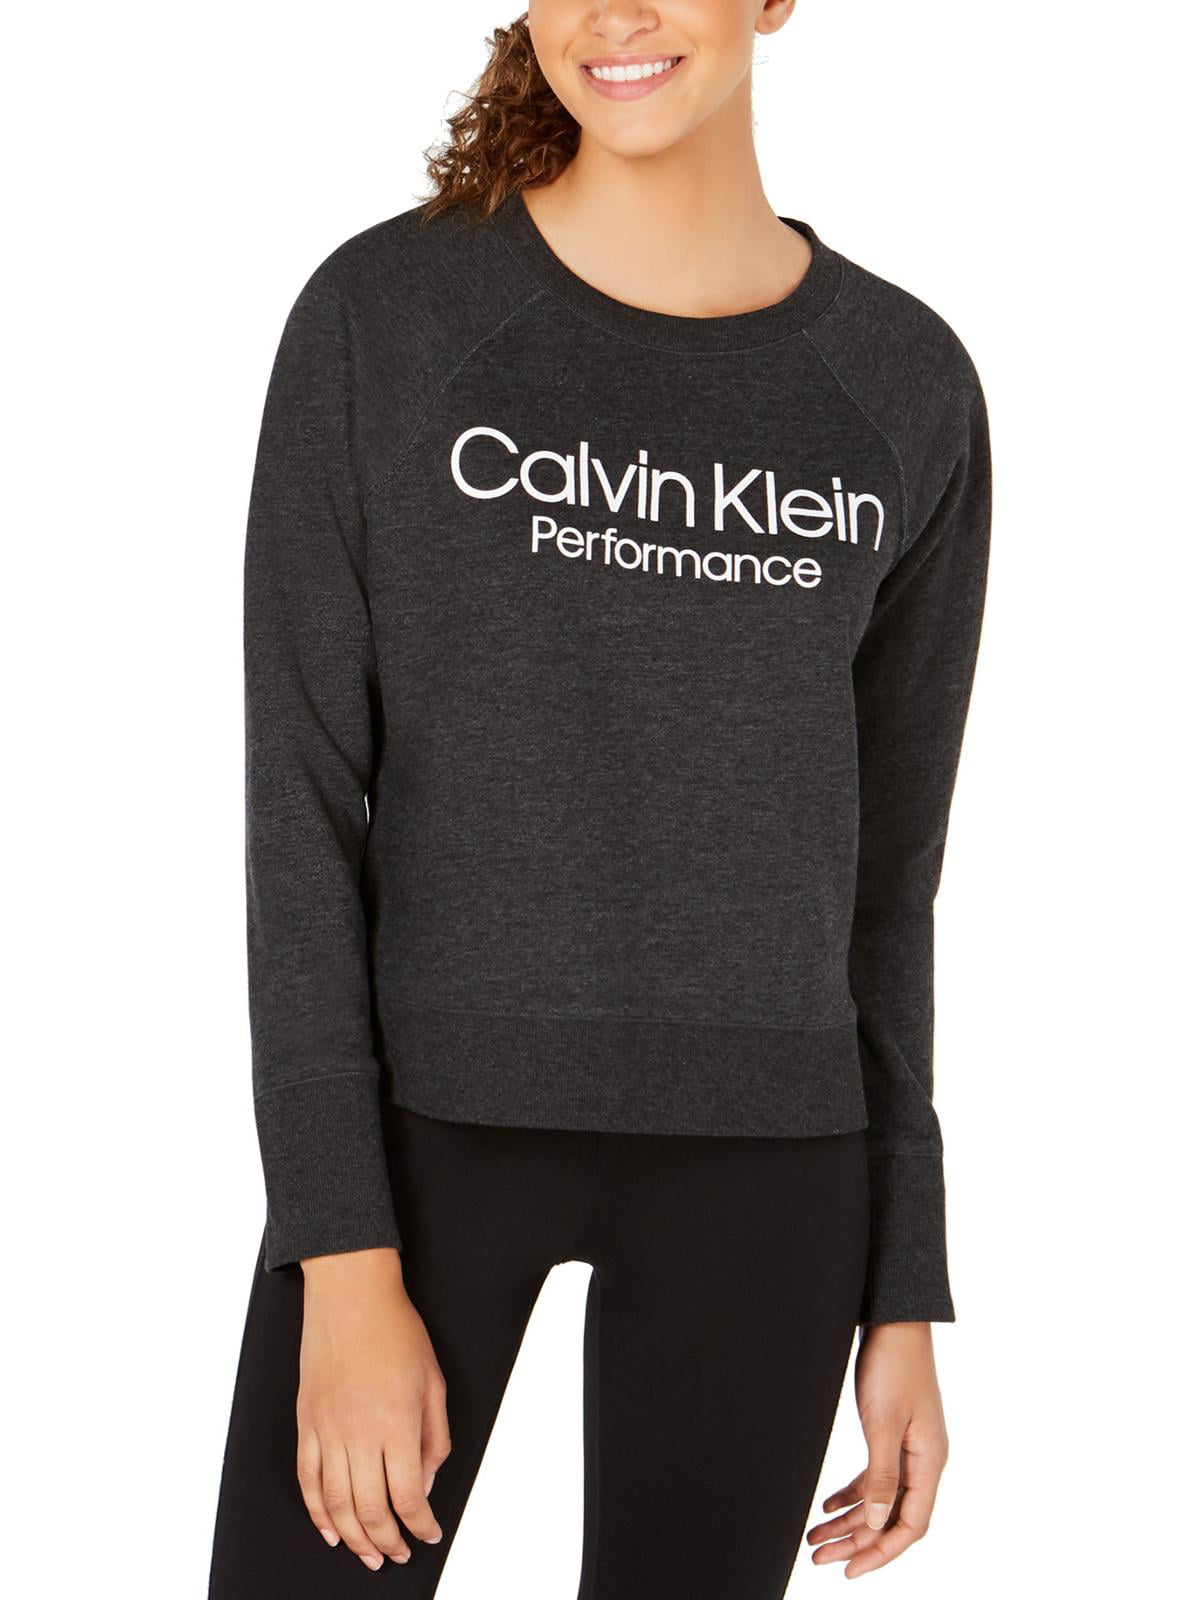 Calvin Klein Performance Womens Fitness Workout Sweatshirt 